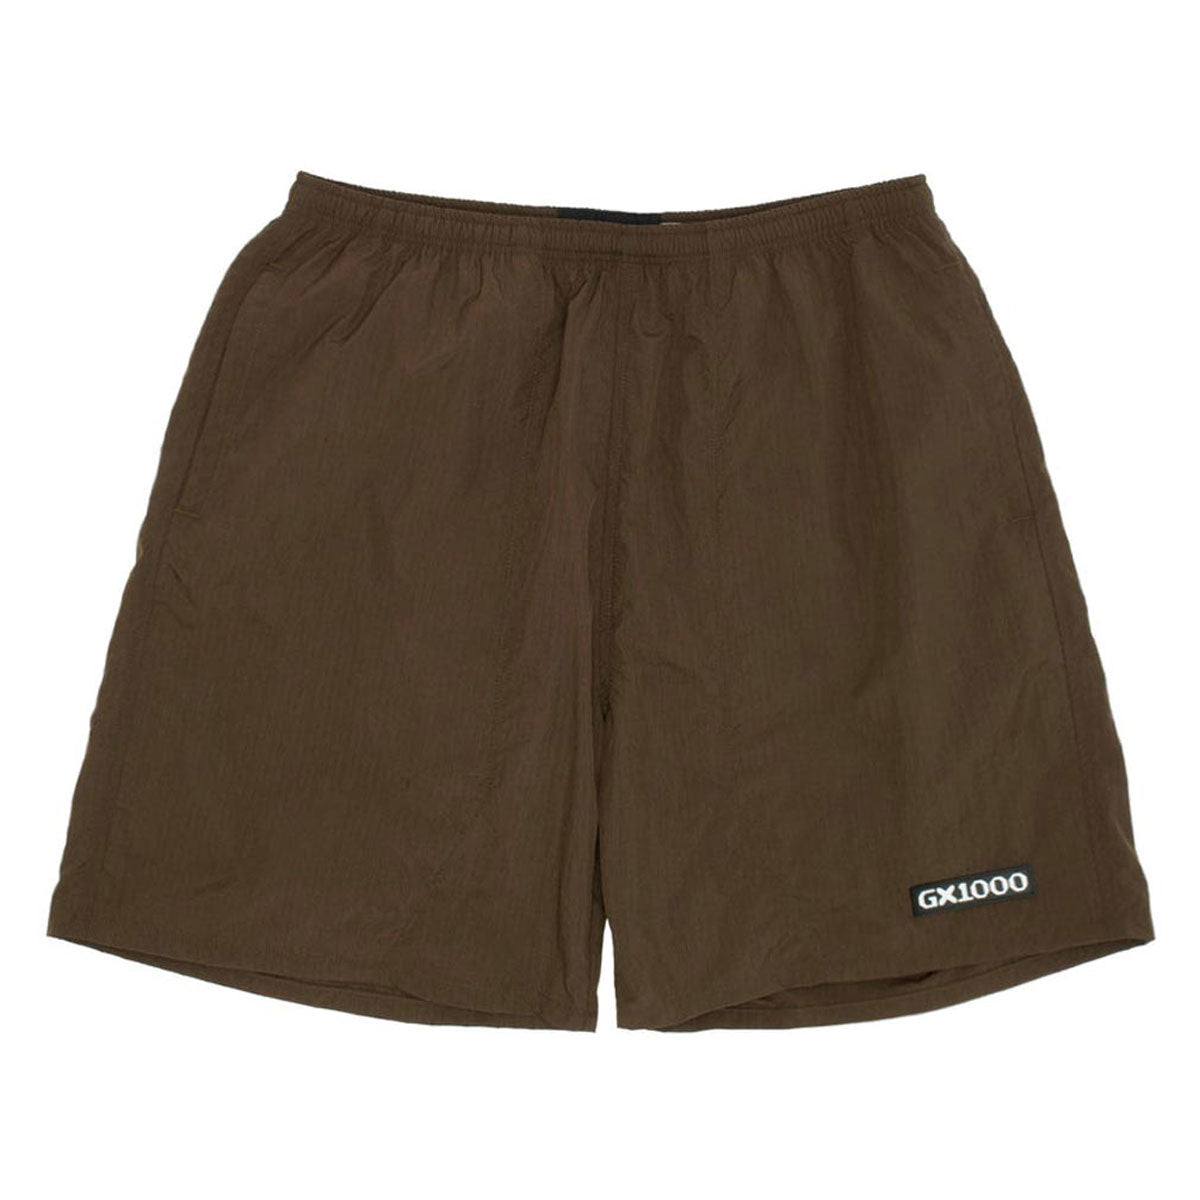 GX1000 Swim Shorts - Brown image 1